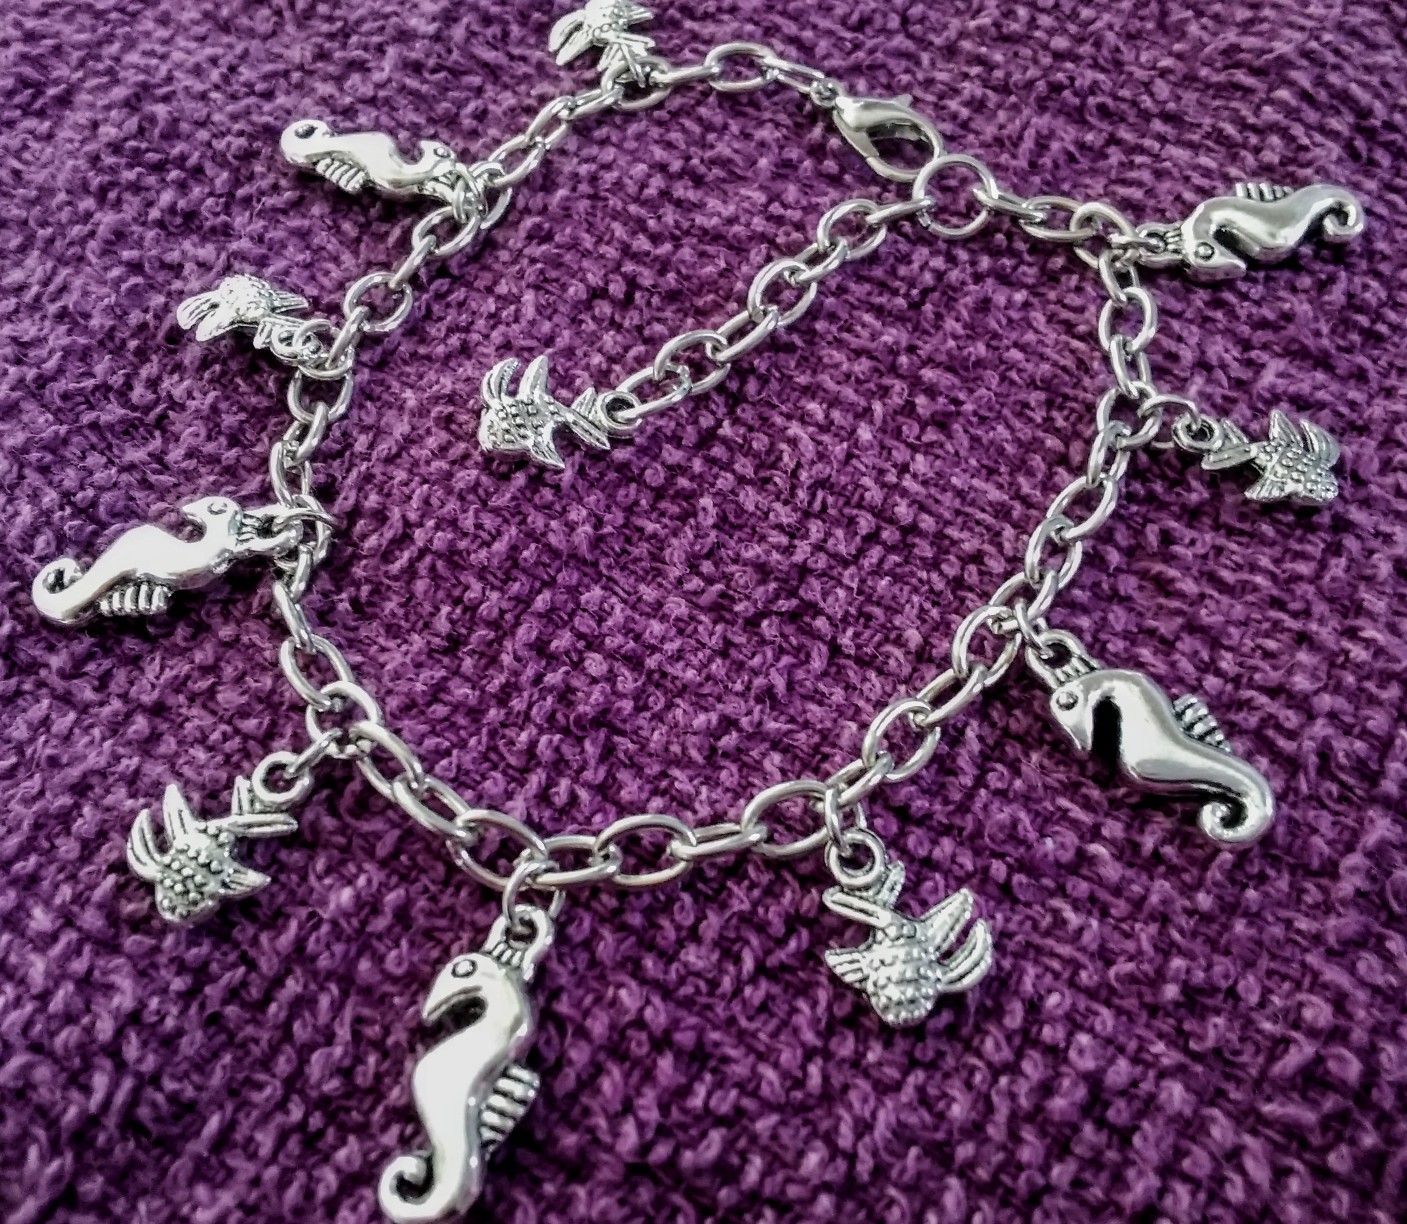 New sea theme charm bracelet for sale